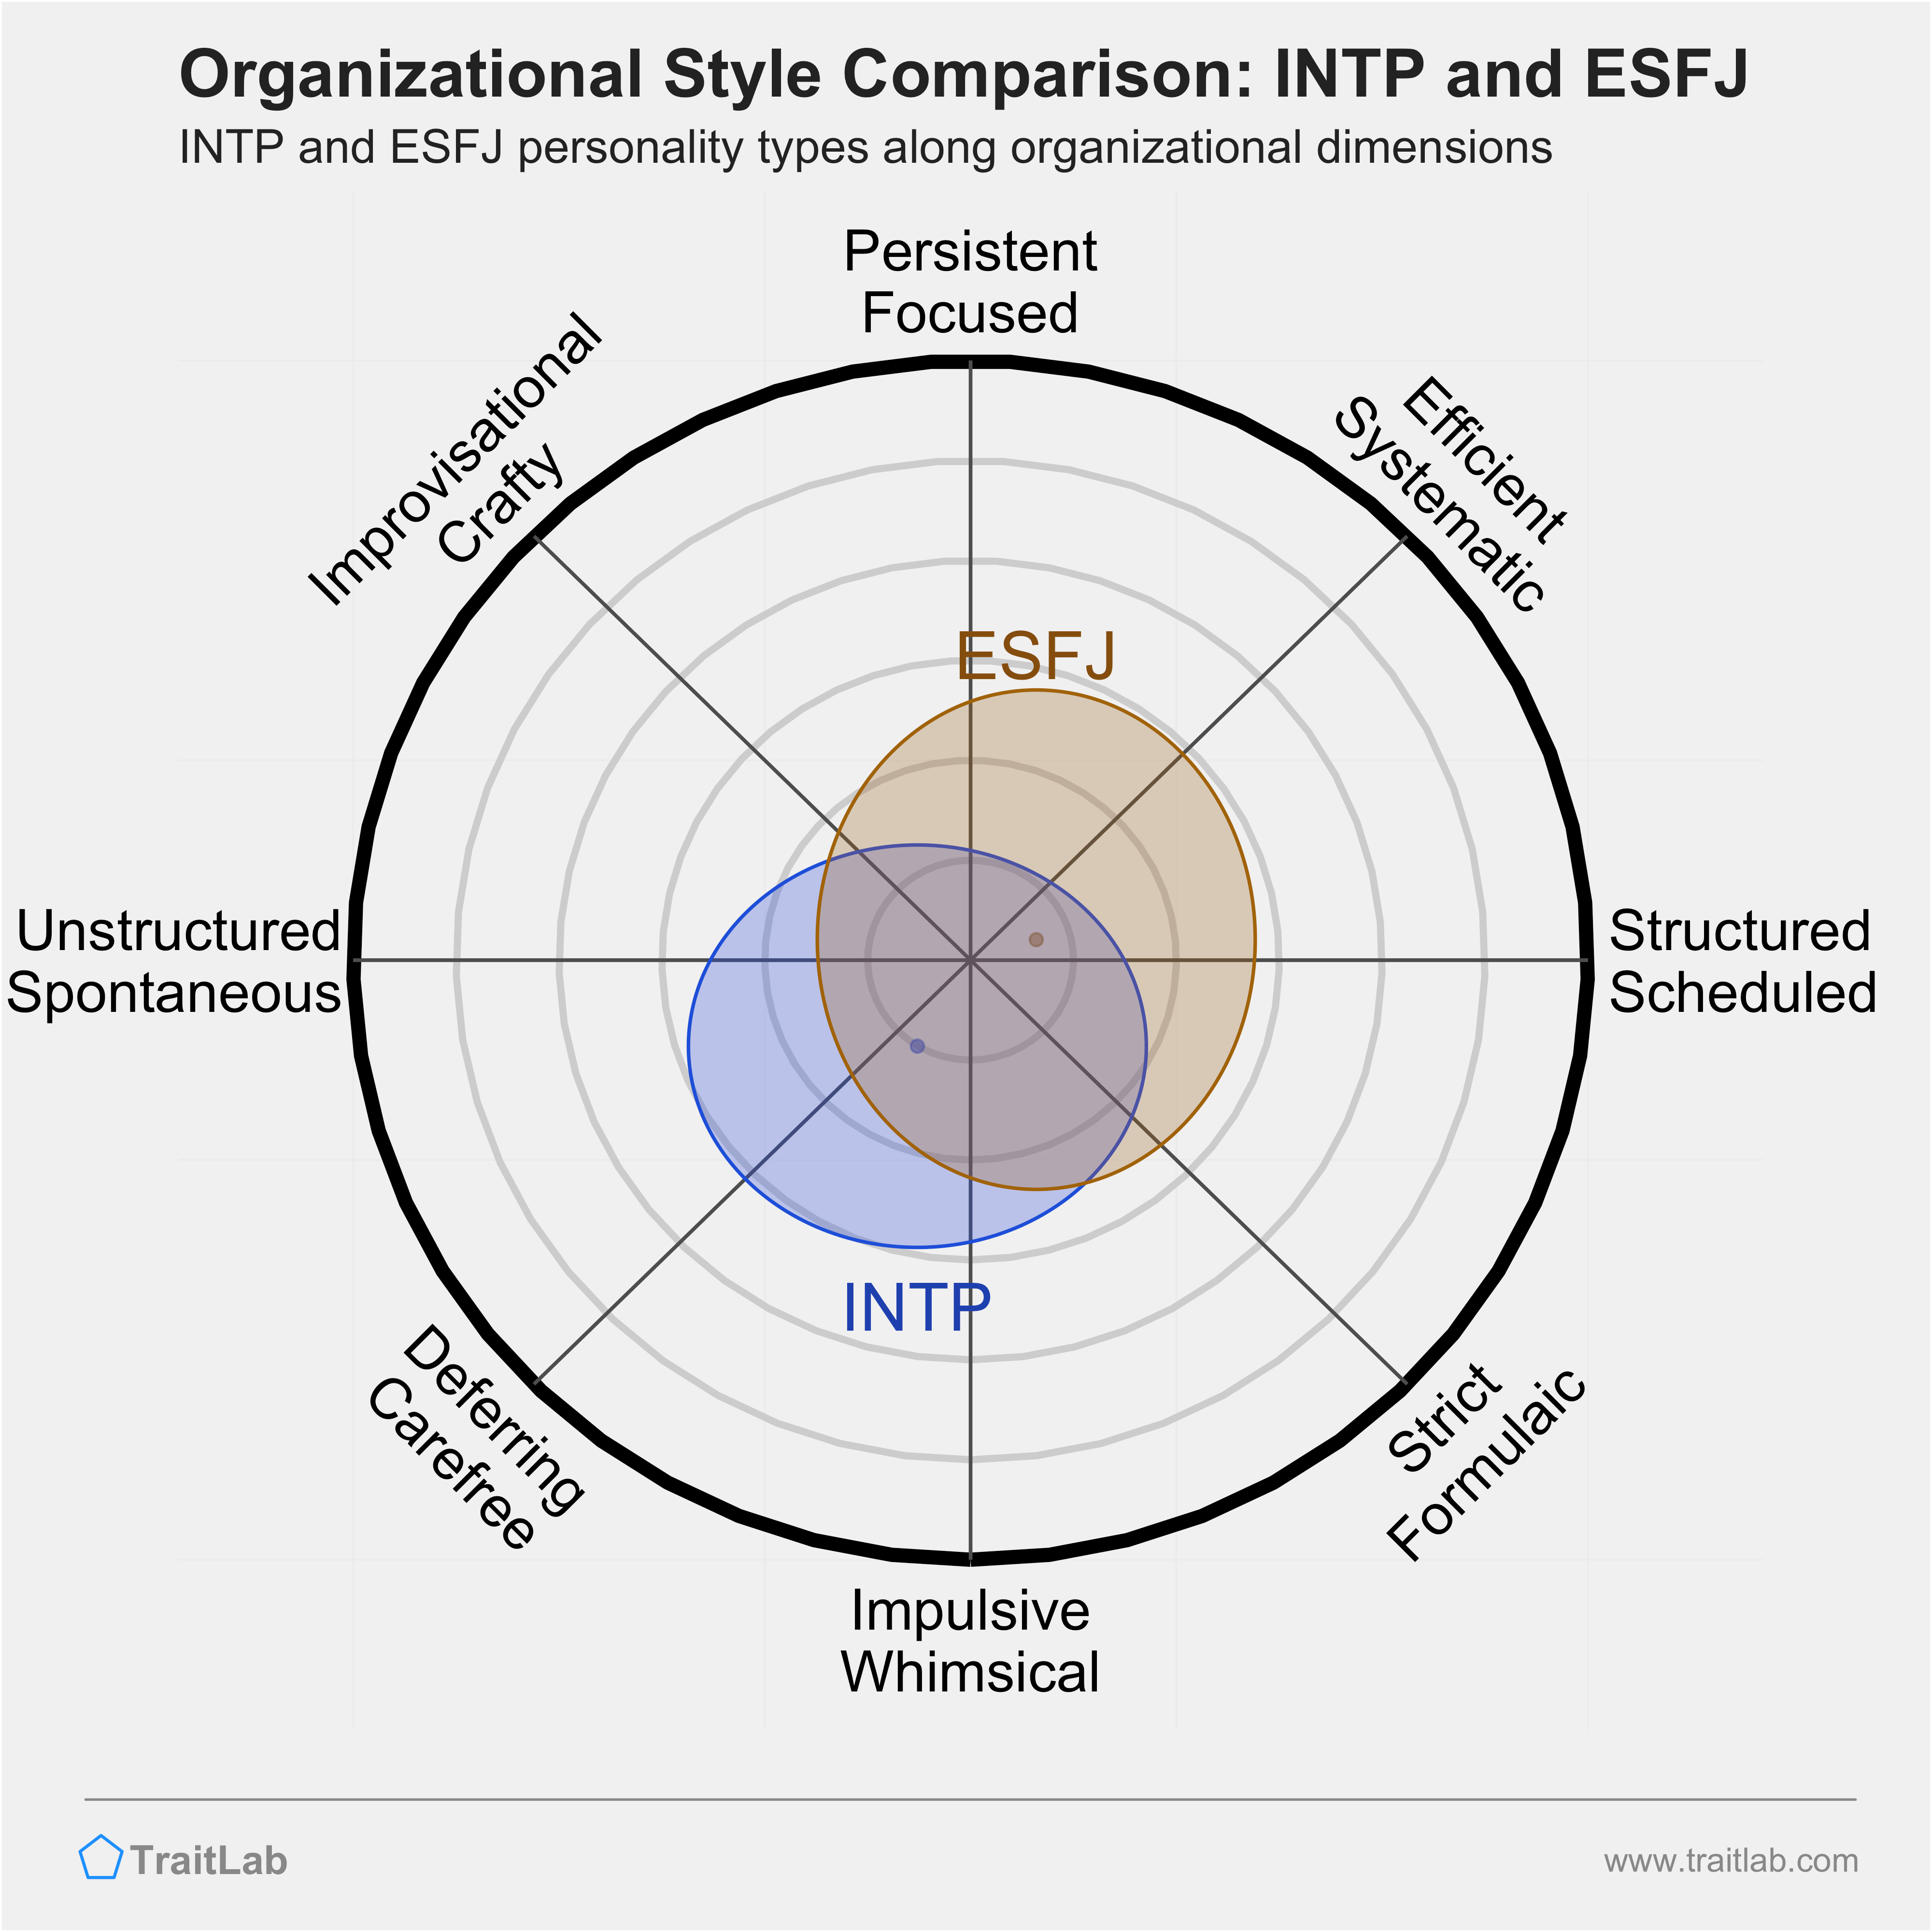 INTP and ESFJ comparison across organizational dimensions